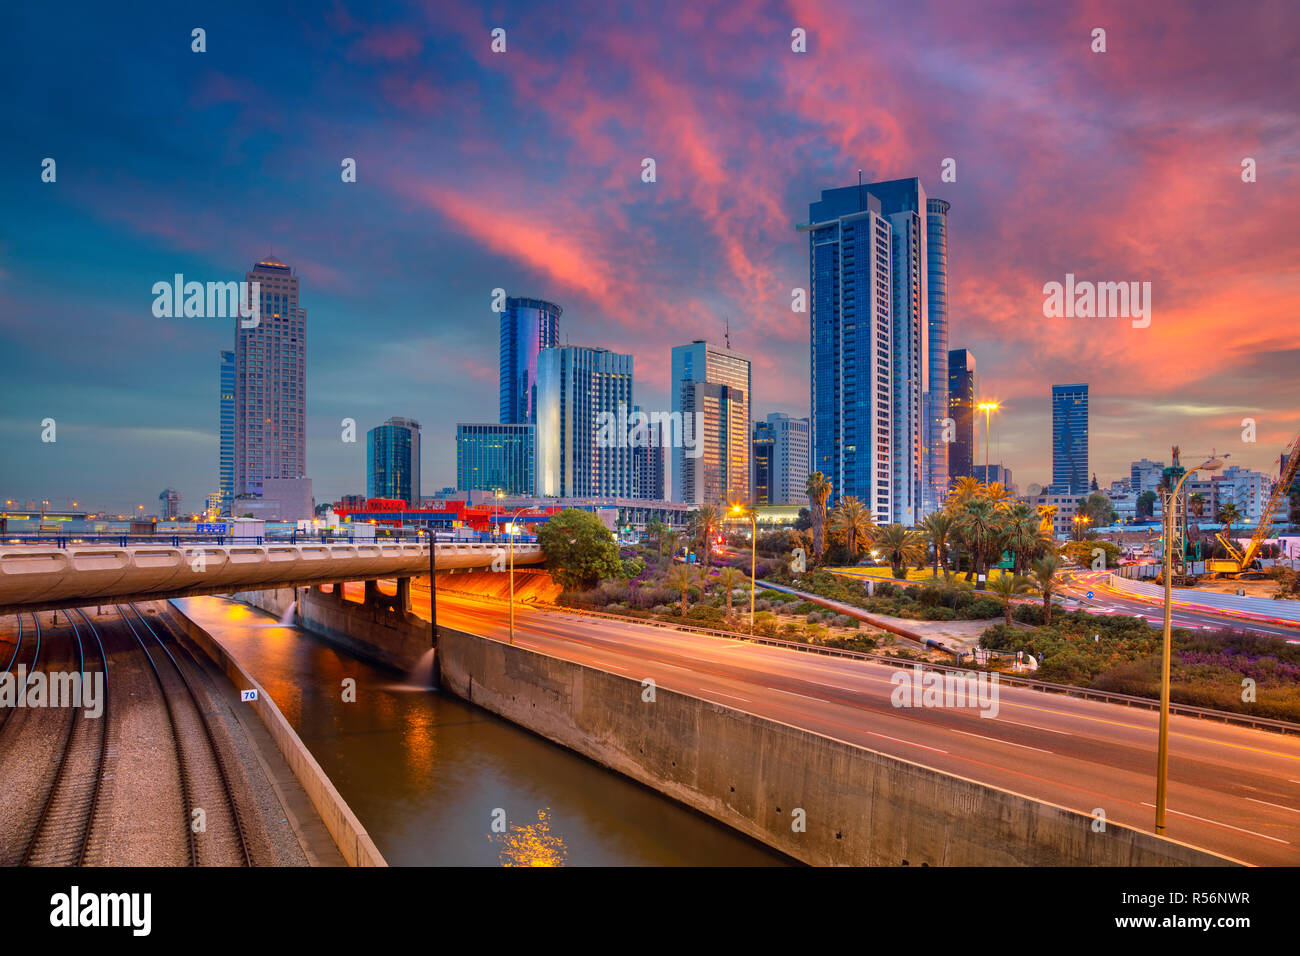 Tel Aviv. Stadtbild Bild von Ramat Gan, Tel Aviv, Israel während dramatischer Sonnenaufgang. Stockfoto